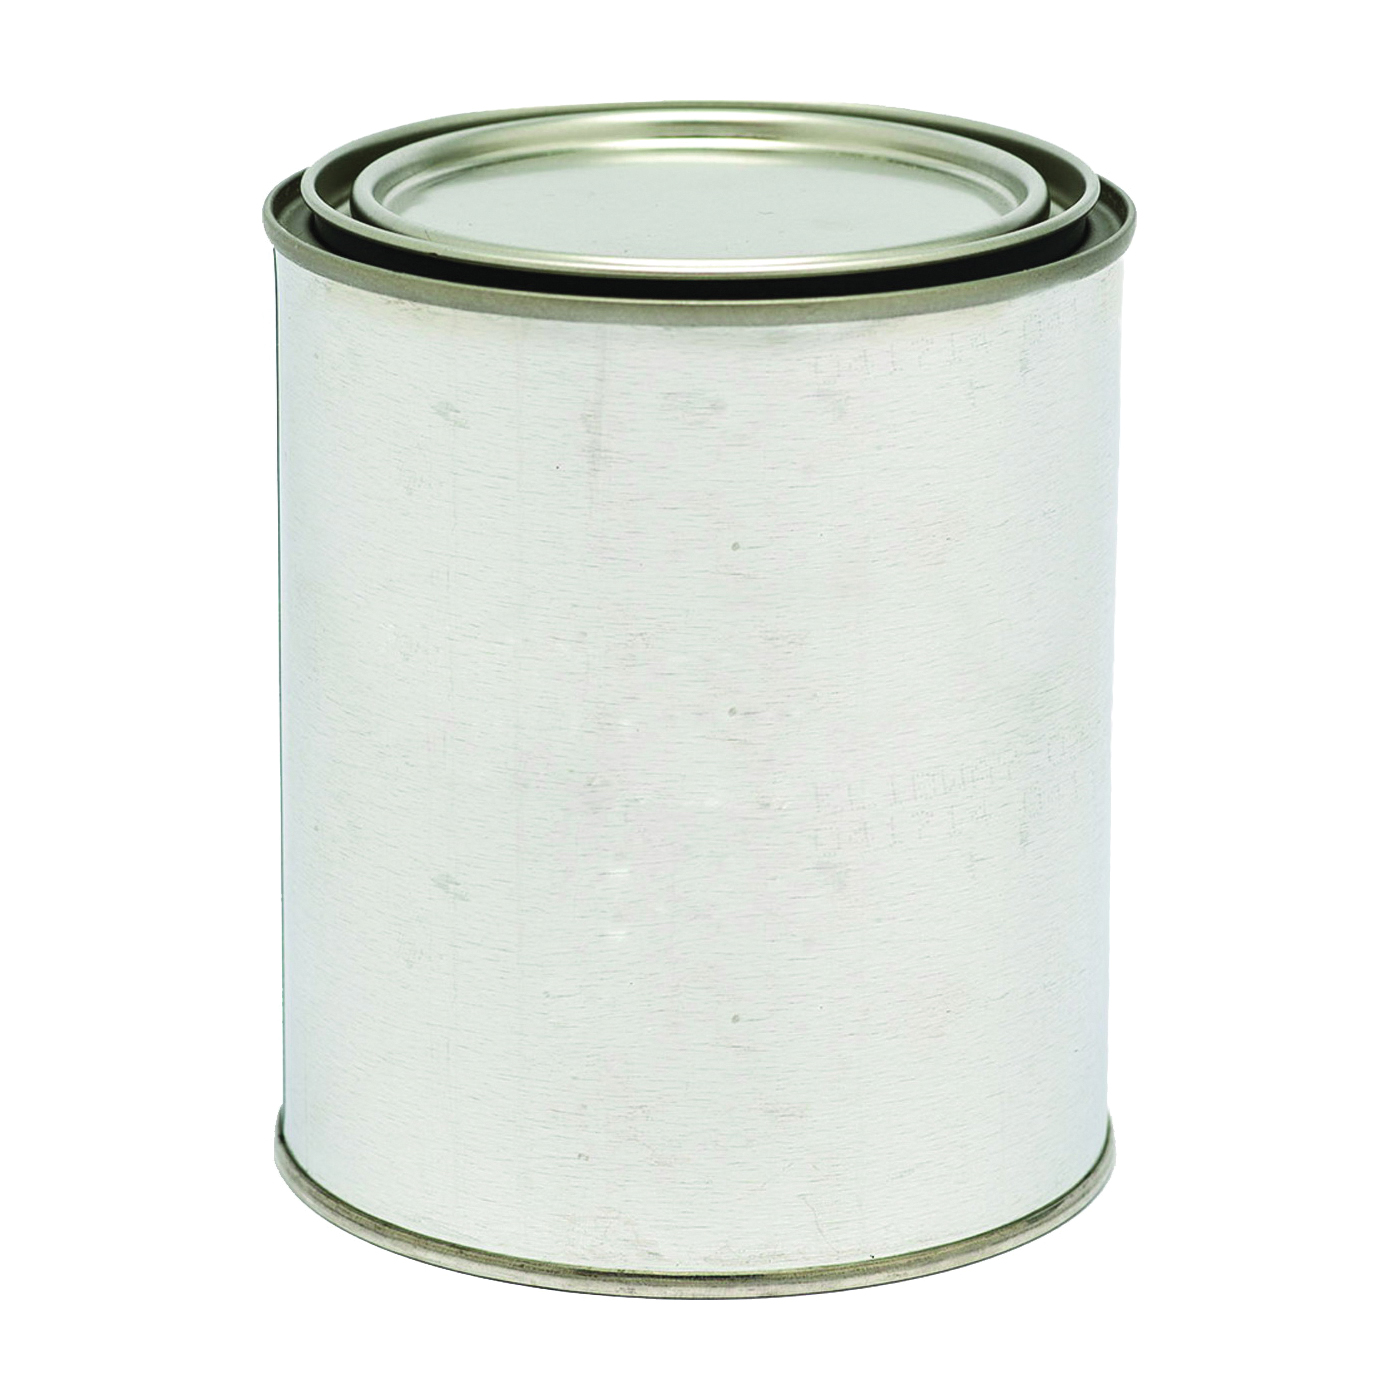 27318 Empty Paint Can, 1 qt Capacity, Metal, Silver